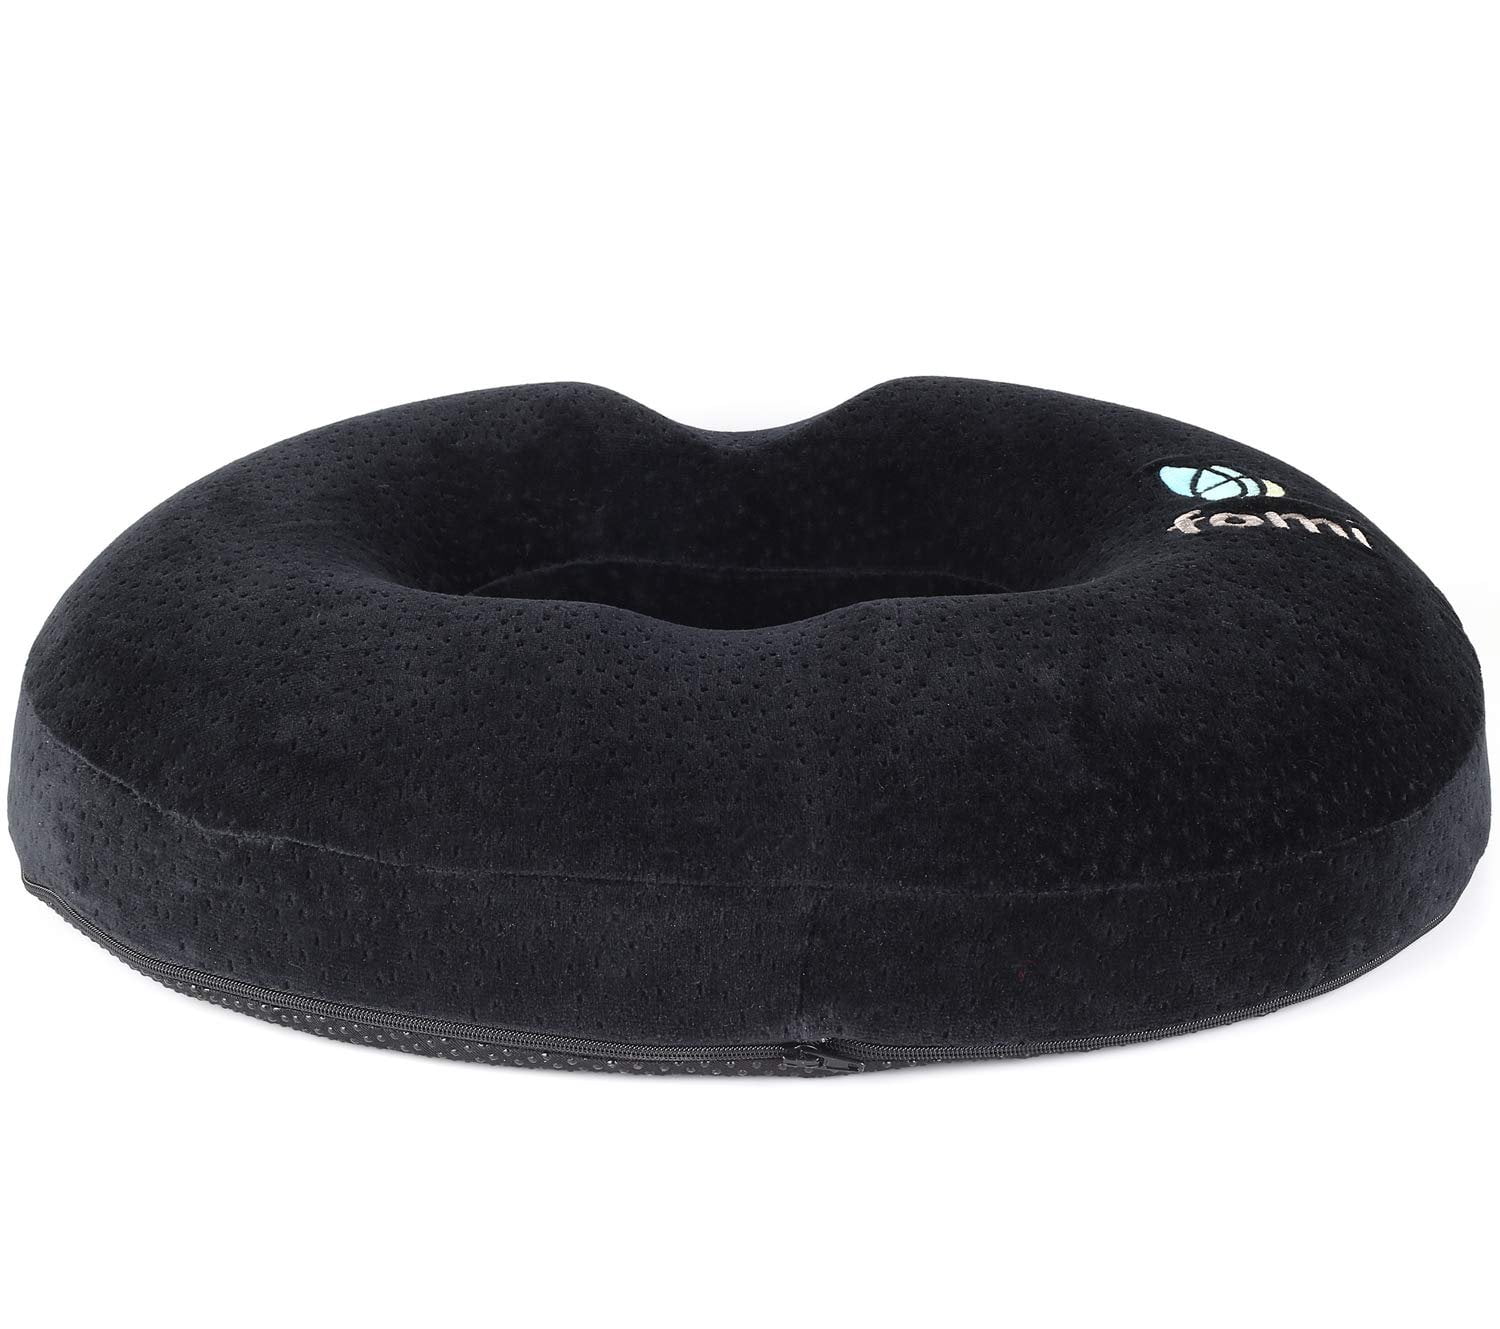 Donut Pillow Hemorrhoid Tailbone Cushion – Large Black Seat